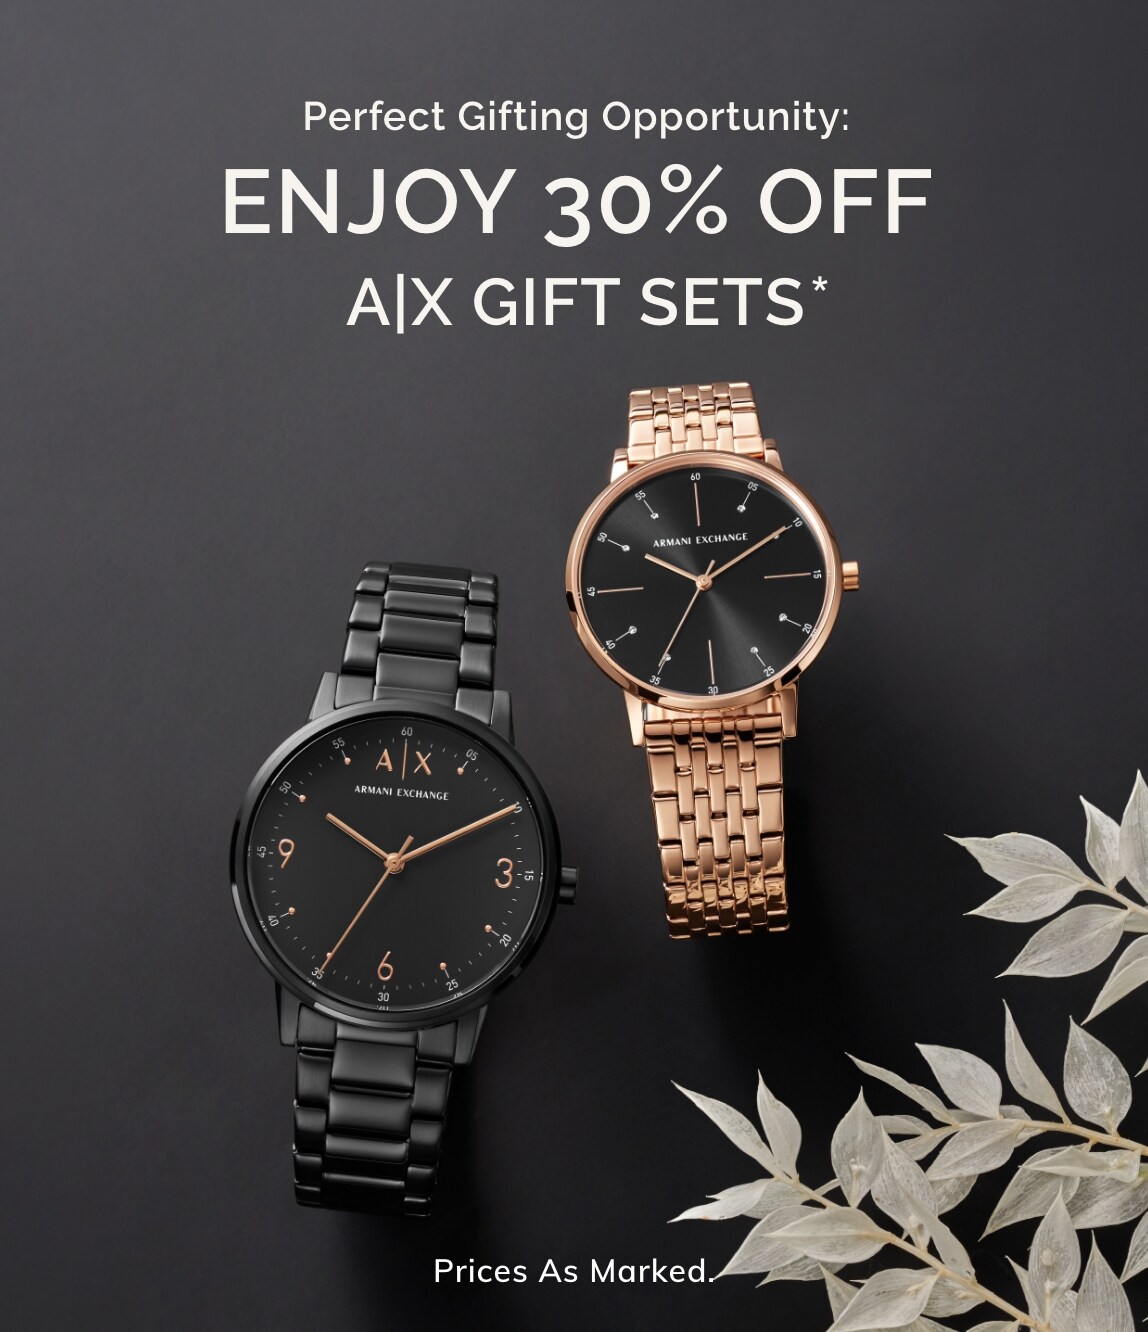 Enjoy 30% Off A|X Gift Sets